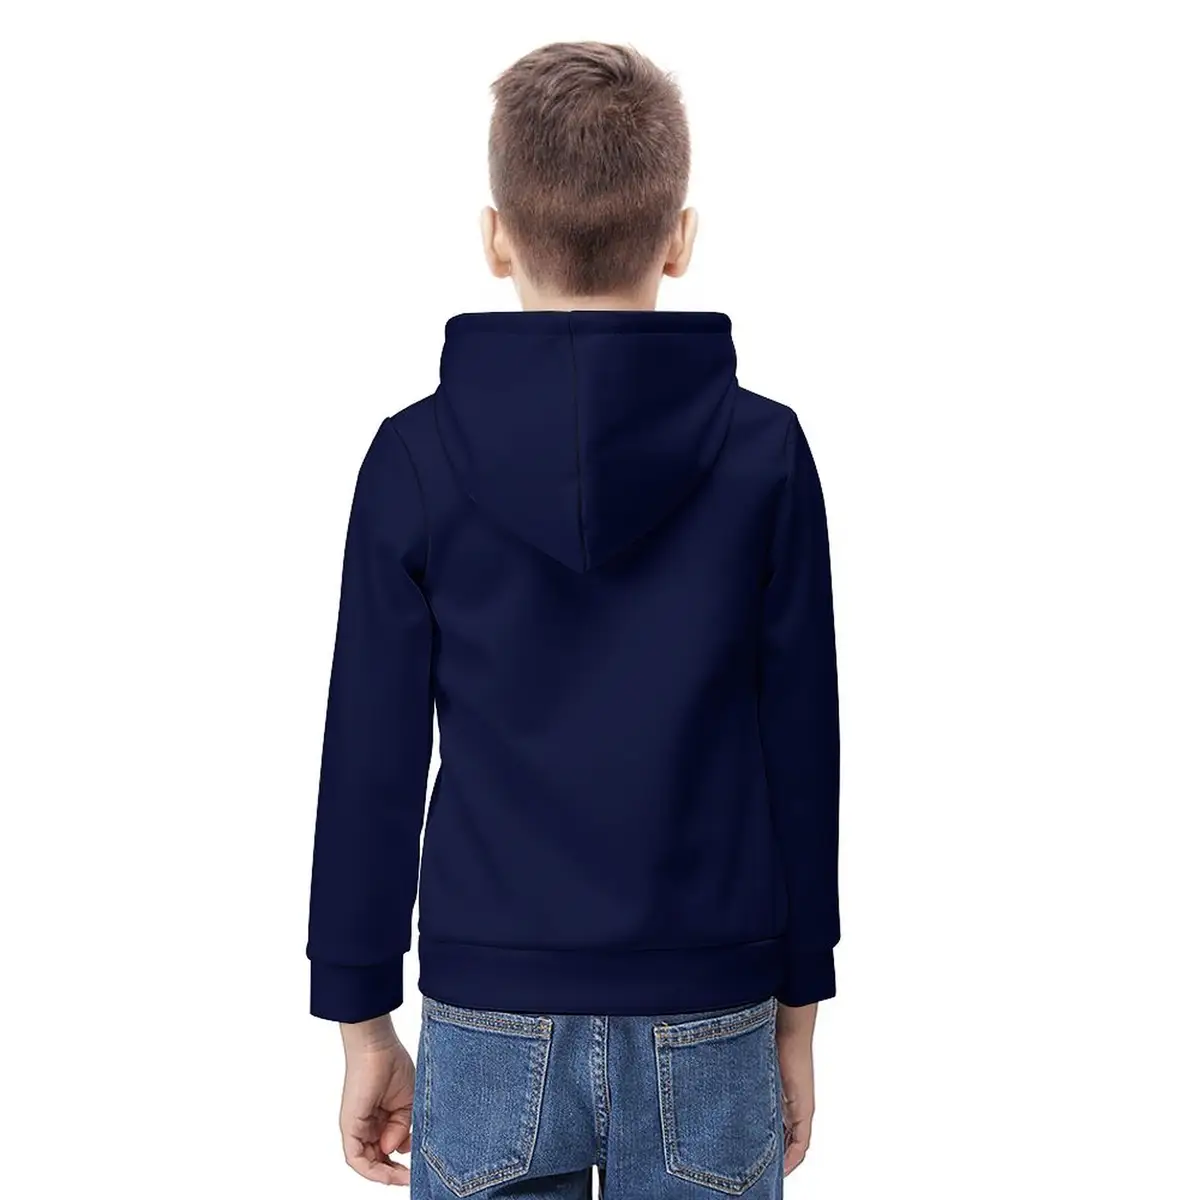 Dark Blue Pac-Man 280gsm Kids Hoodie, Vintage Video Game Apparel Unisex Comfortable Front Pocket Sweater Cool Kiddo 14